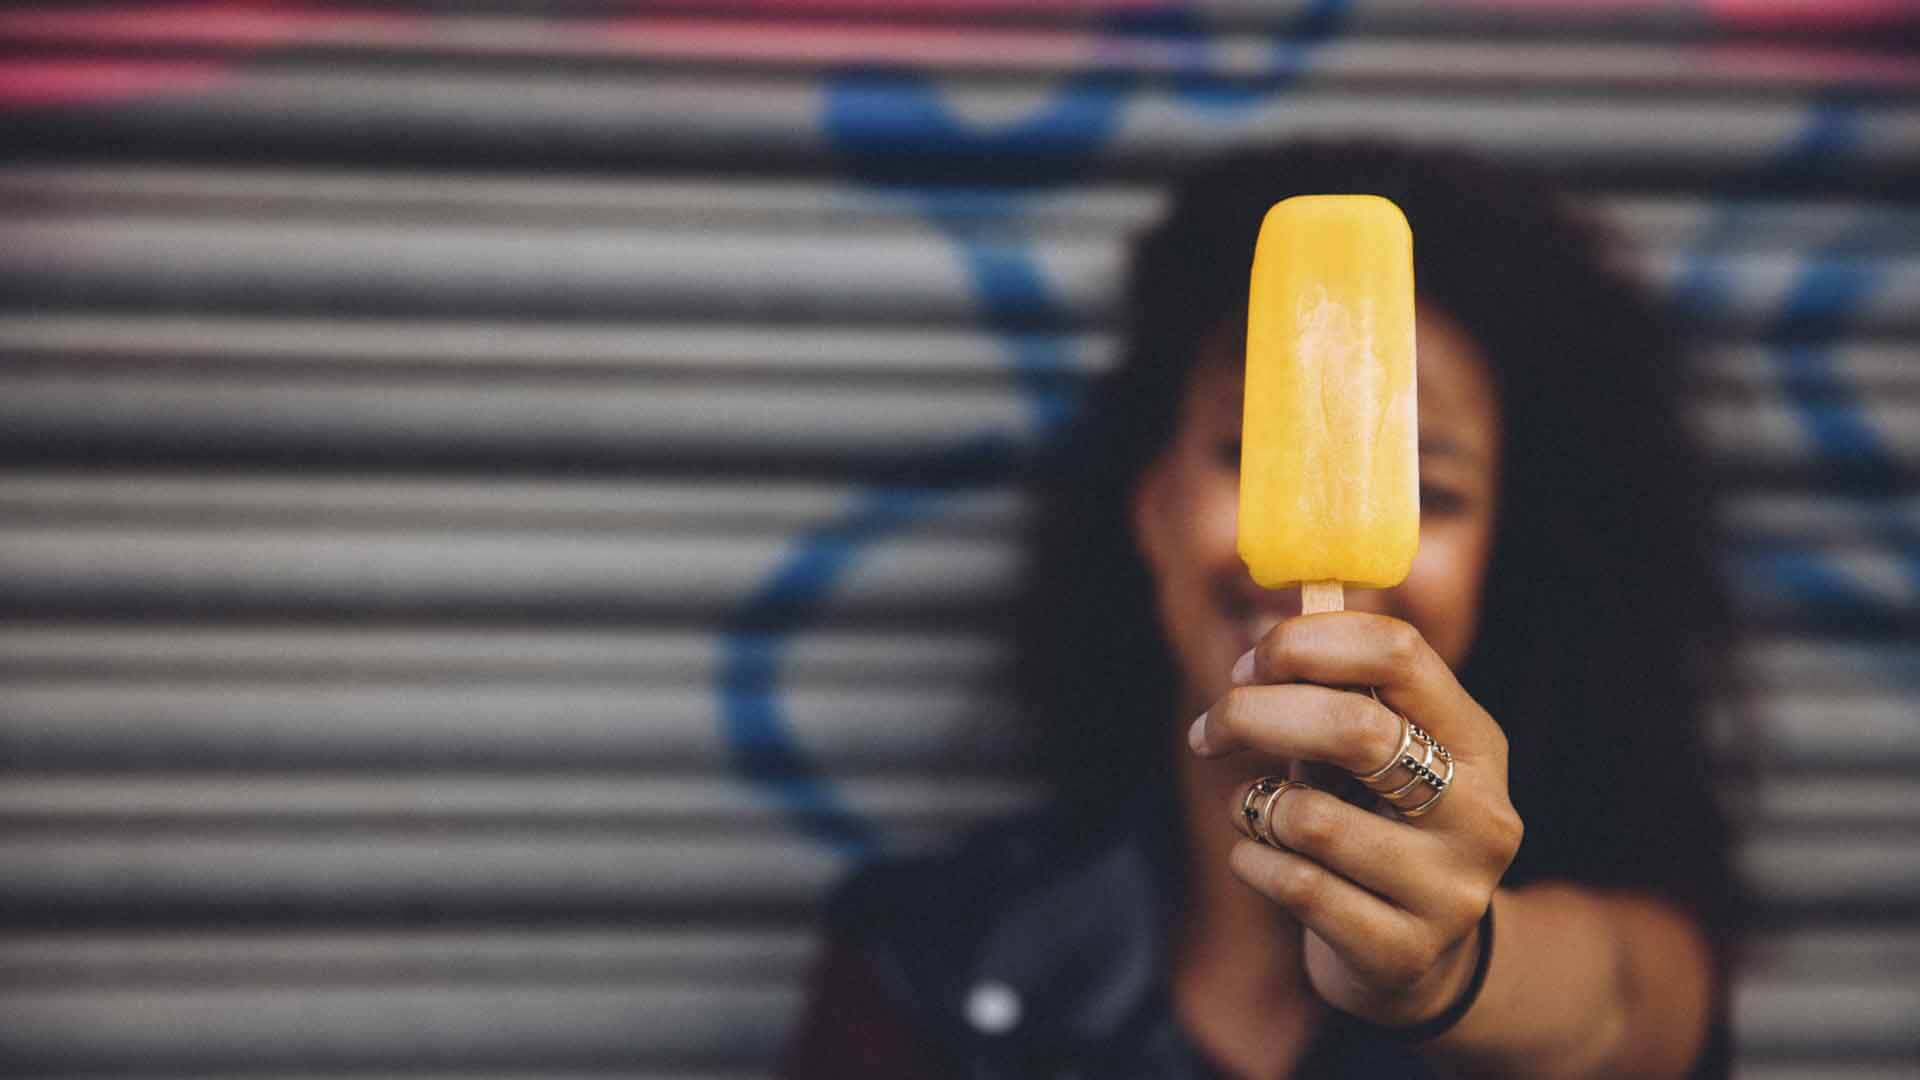 Frau hält ein gelbes Eis ins Bild